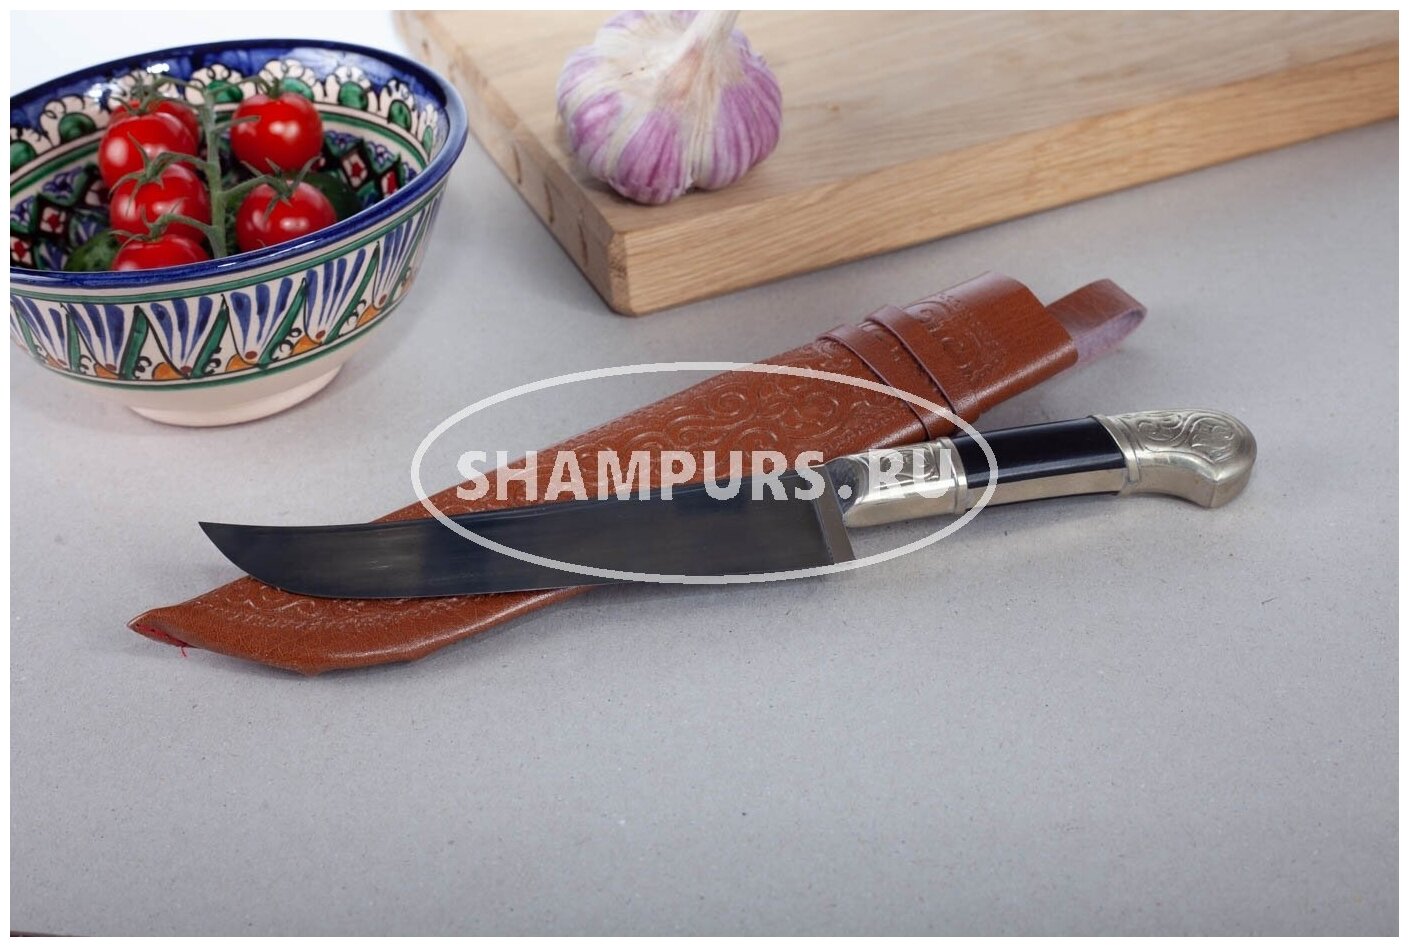 Узбекский нож пчак Бухара